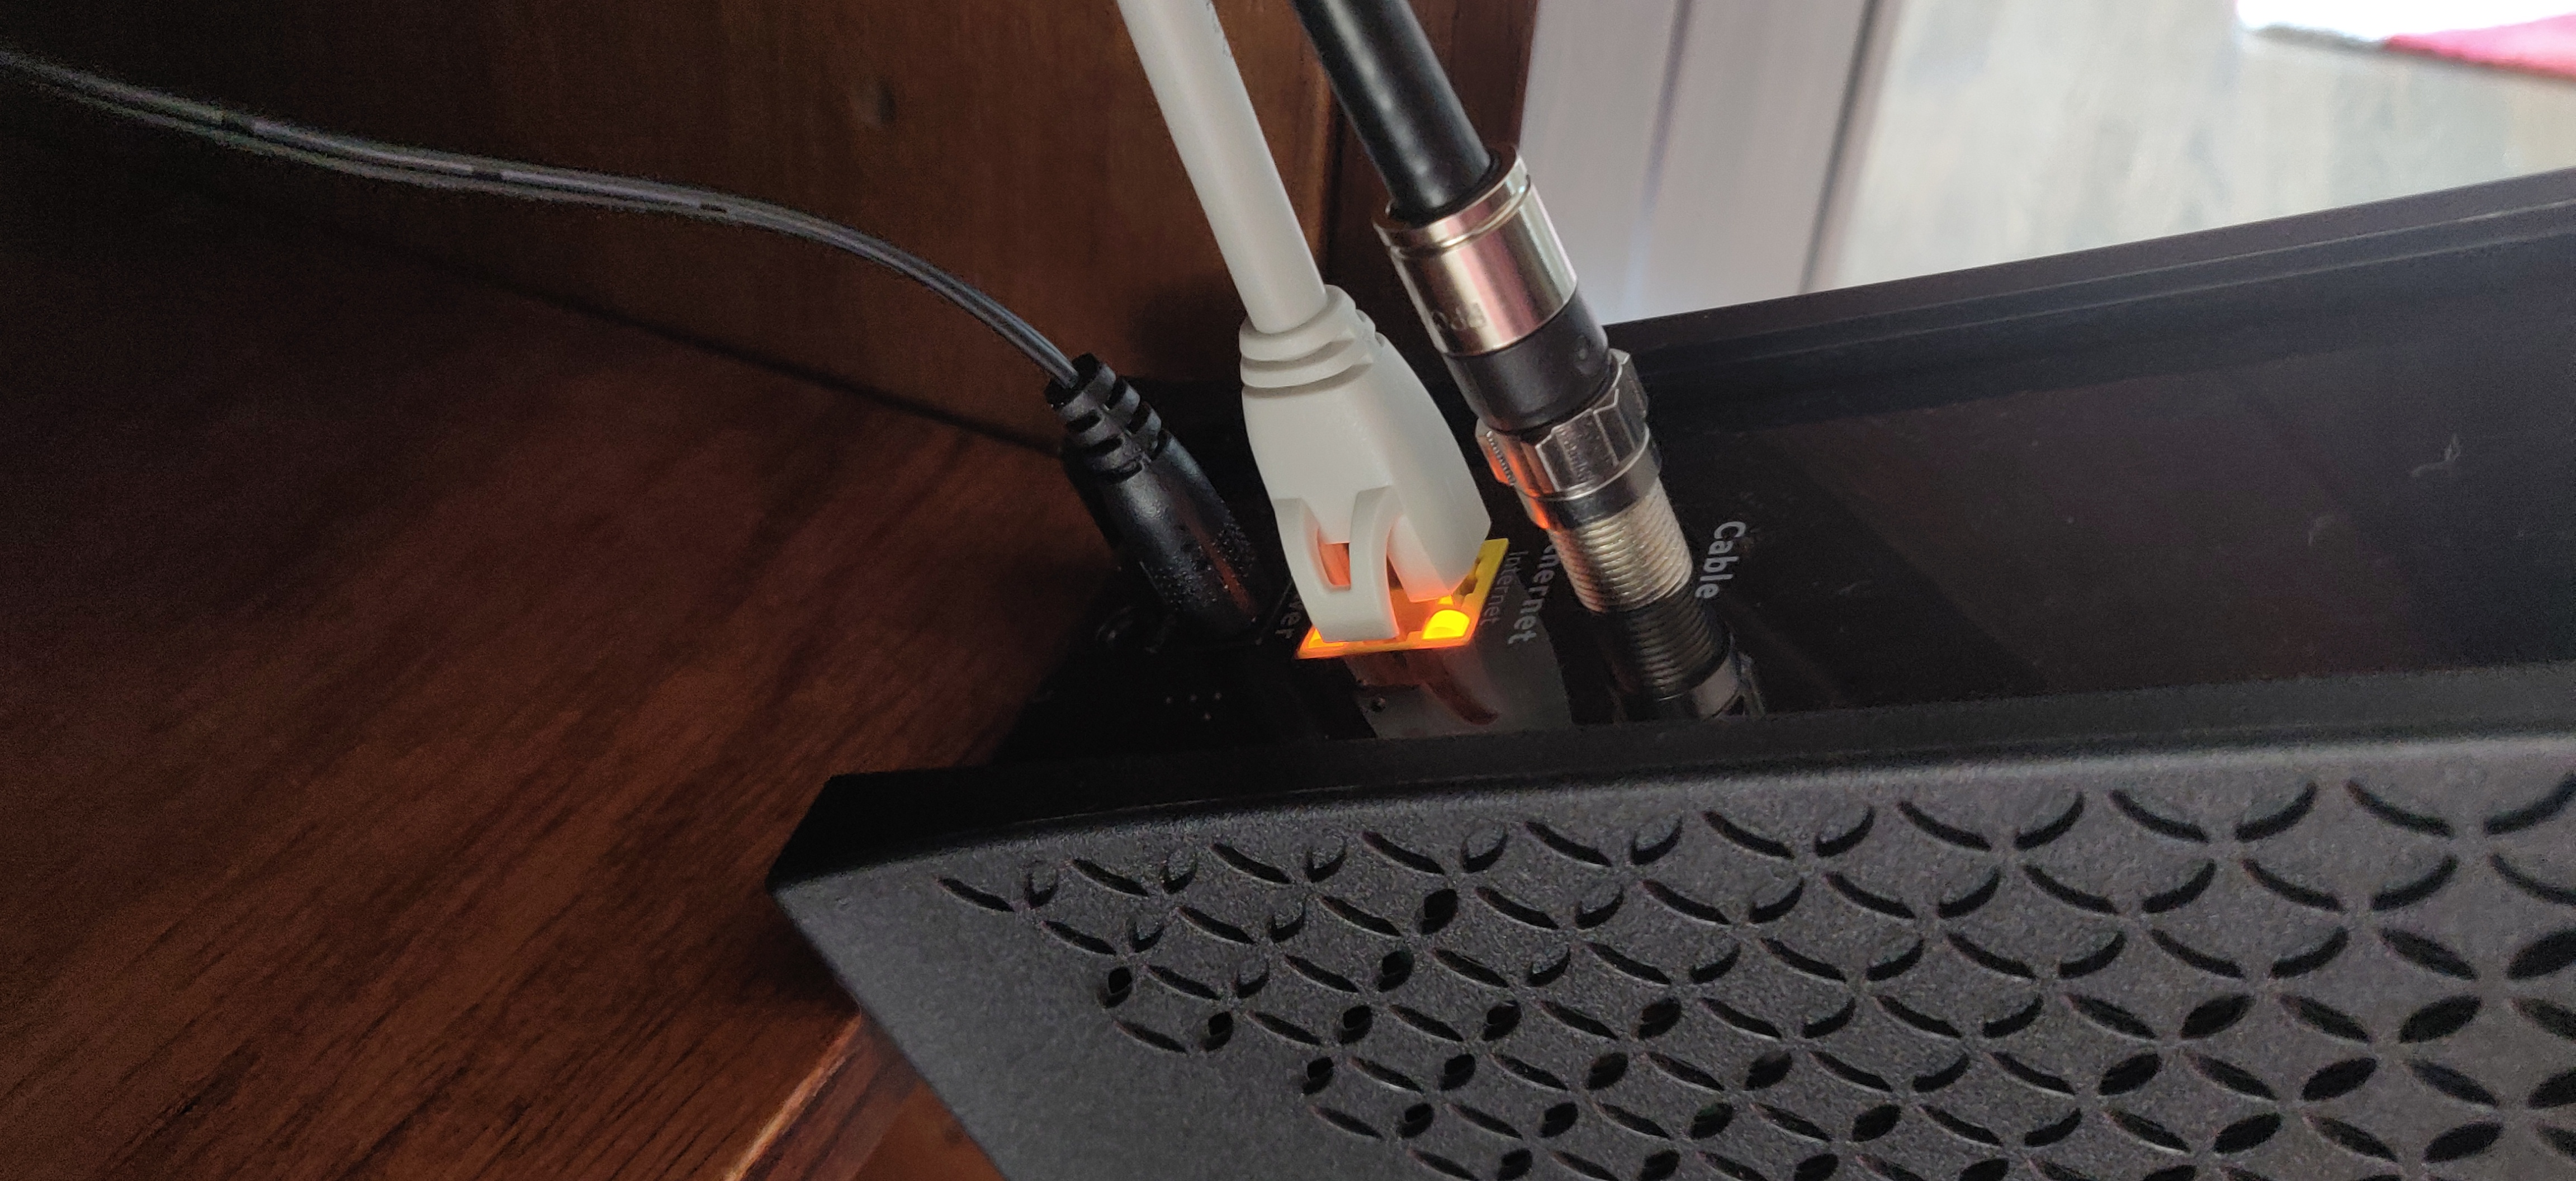 Ethernet Lights on cable modem port are amber - NETGEAR Communities